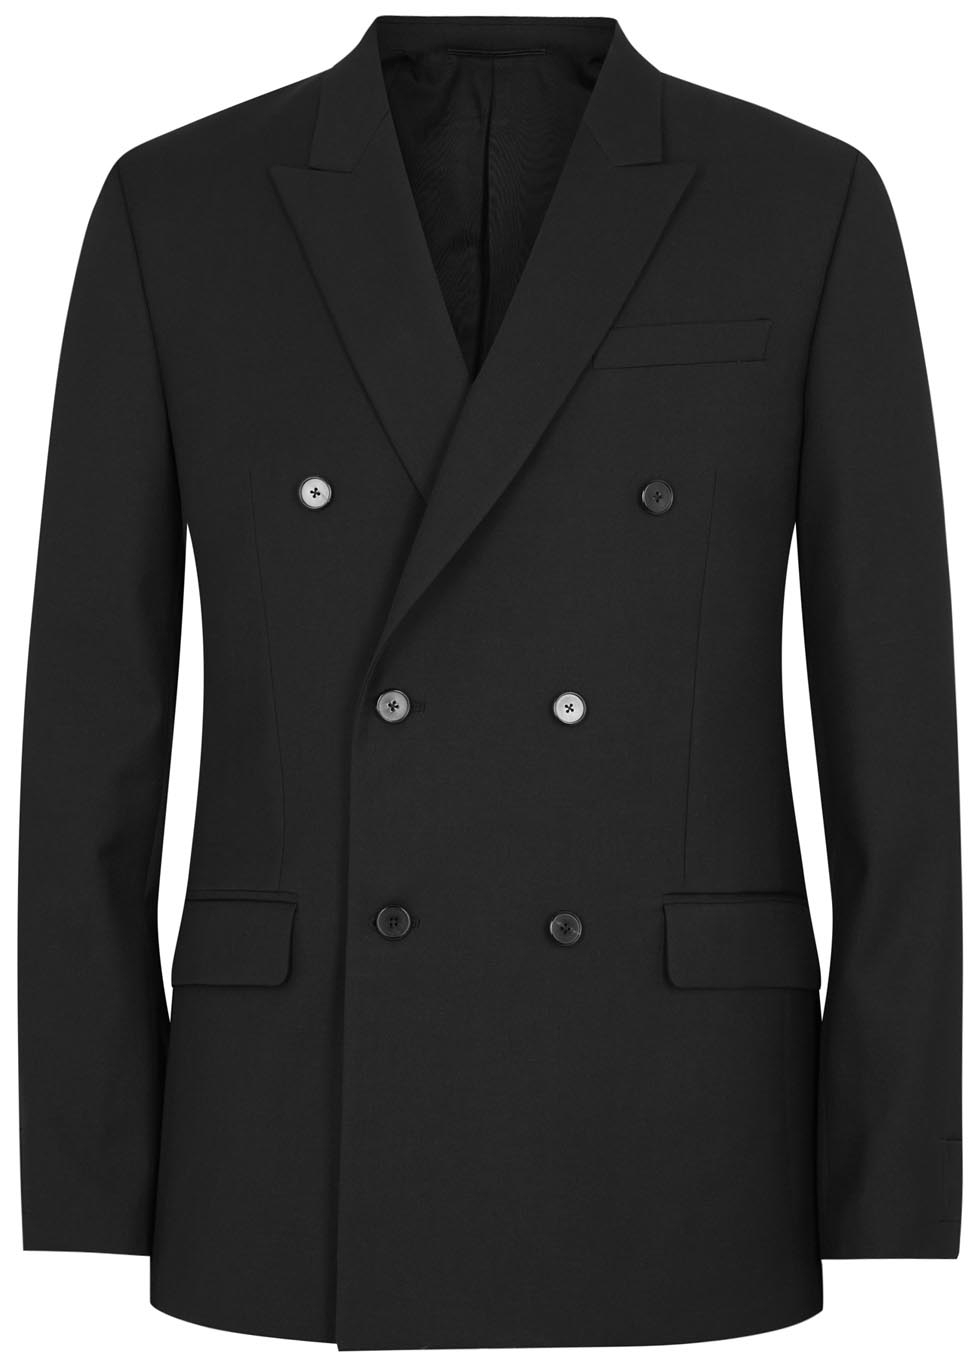 Black double-breasted wool blazer